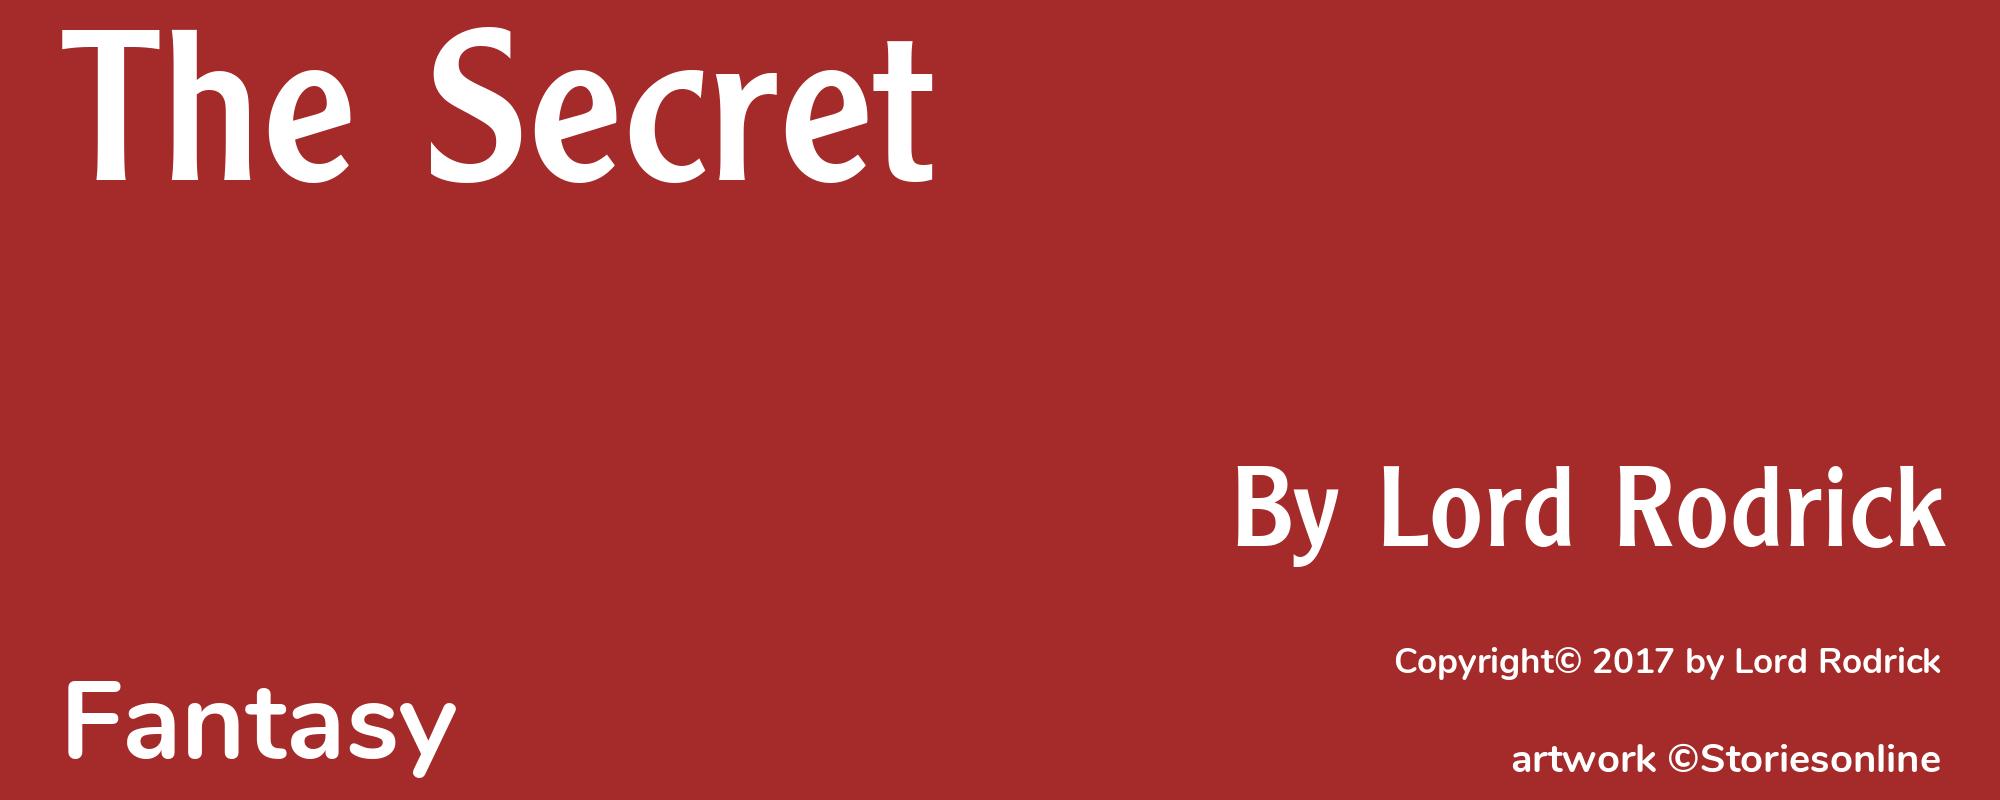 The Secret - Cover